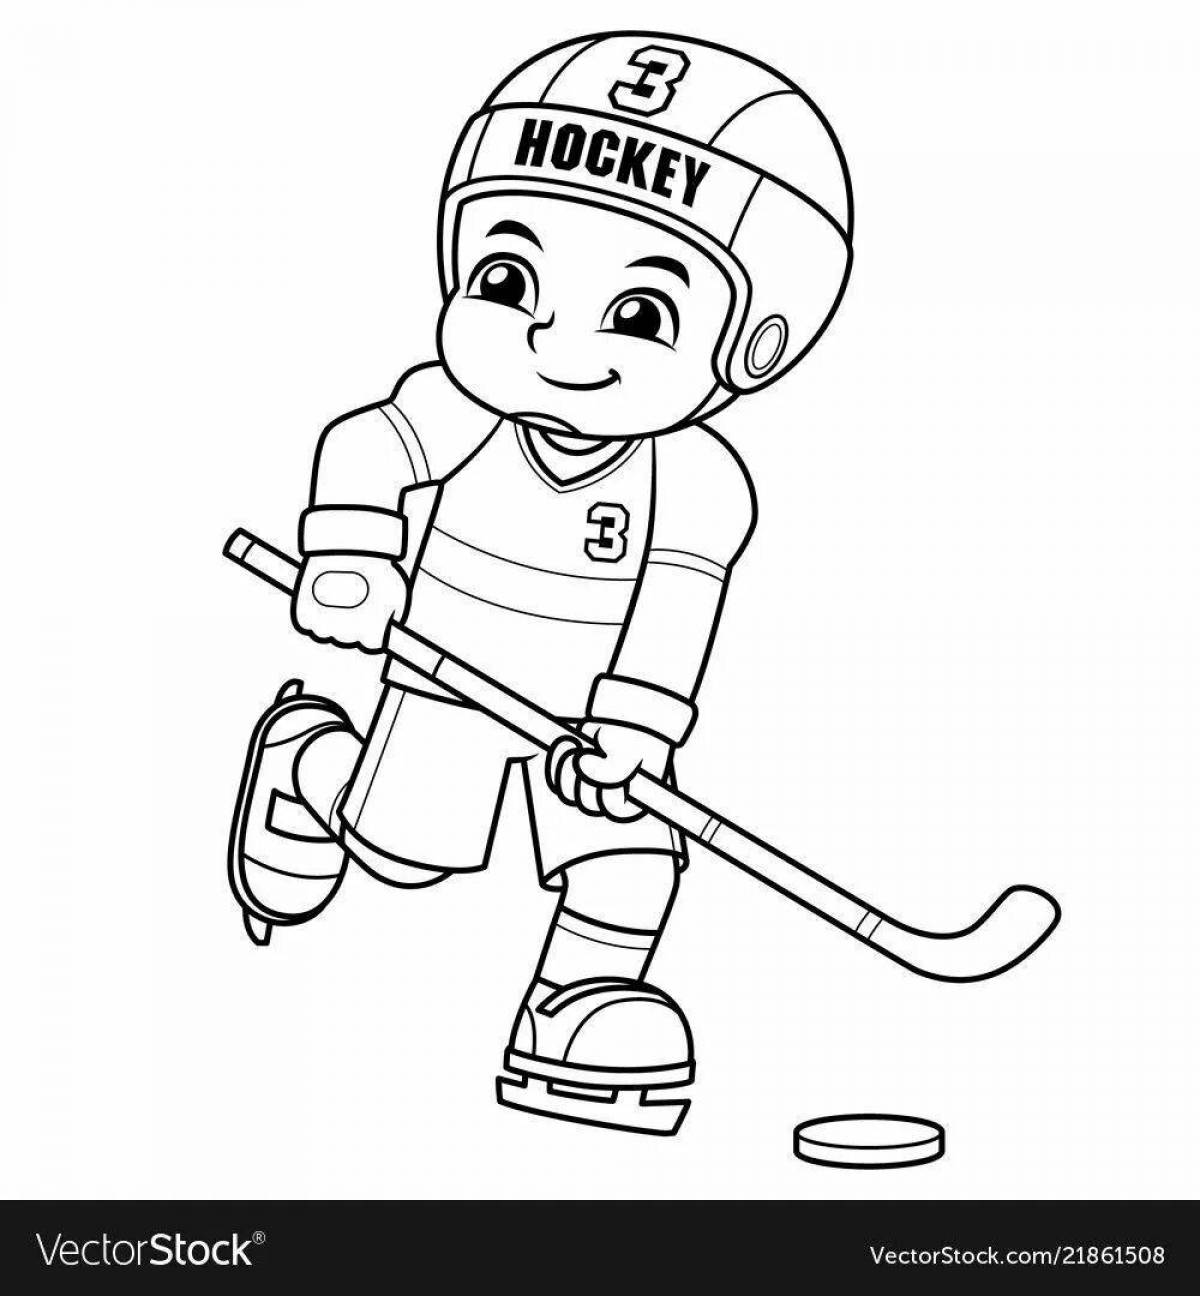 Focused children playing hockey